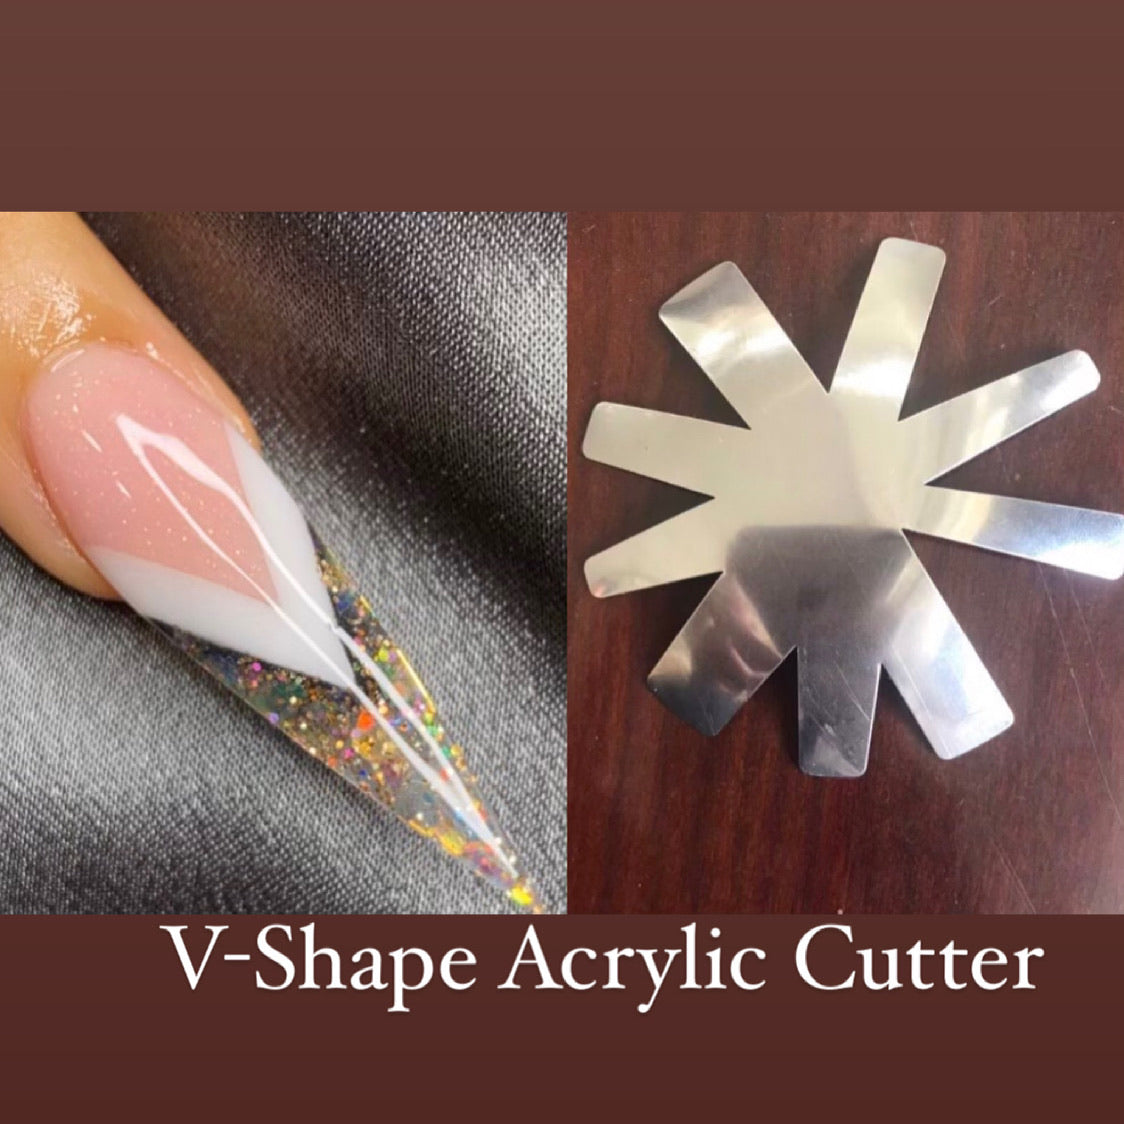 V-shape Acrylic Cutter